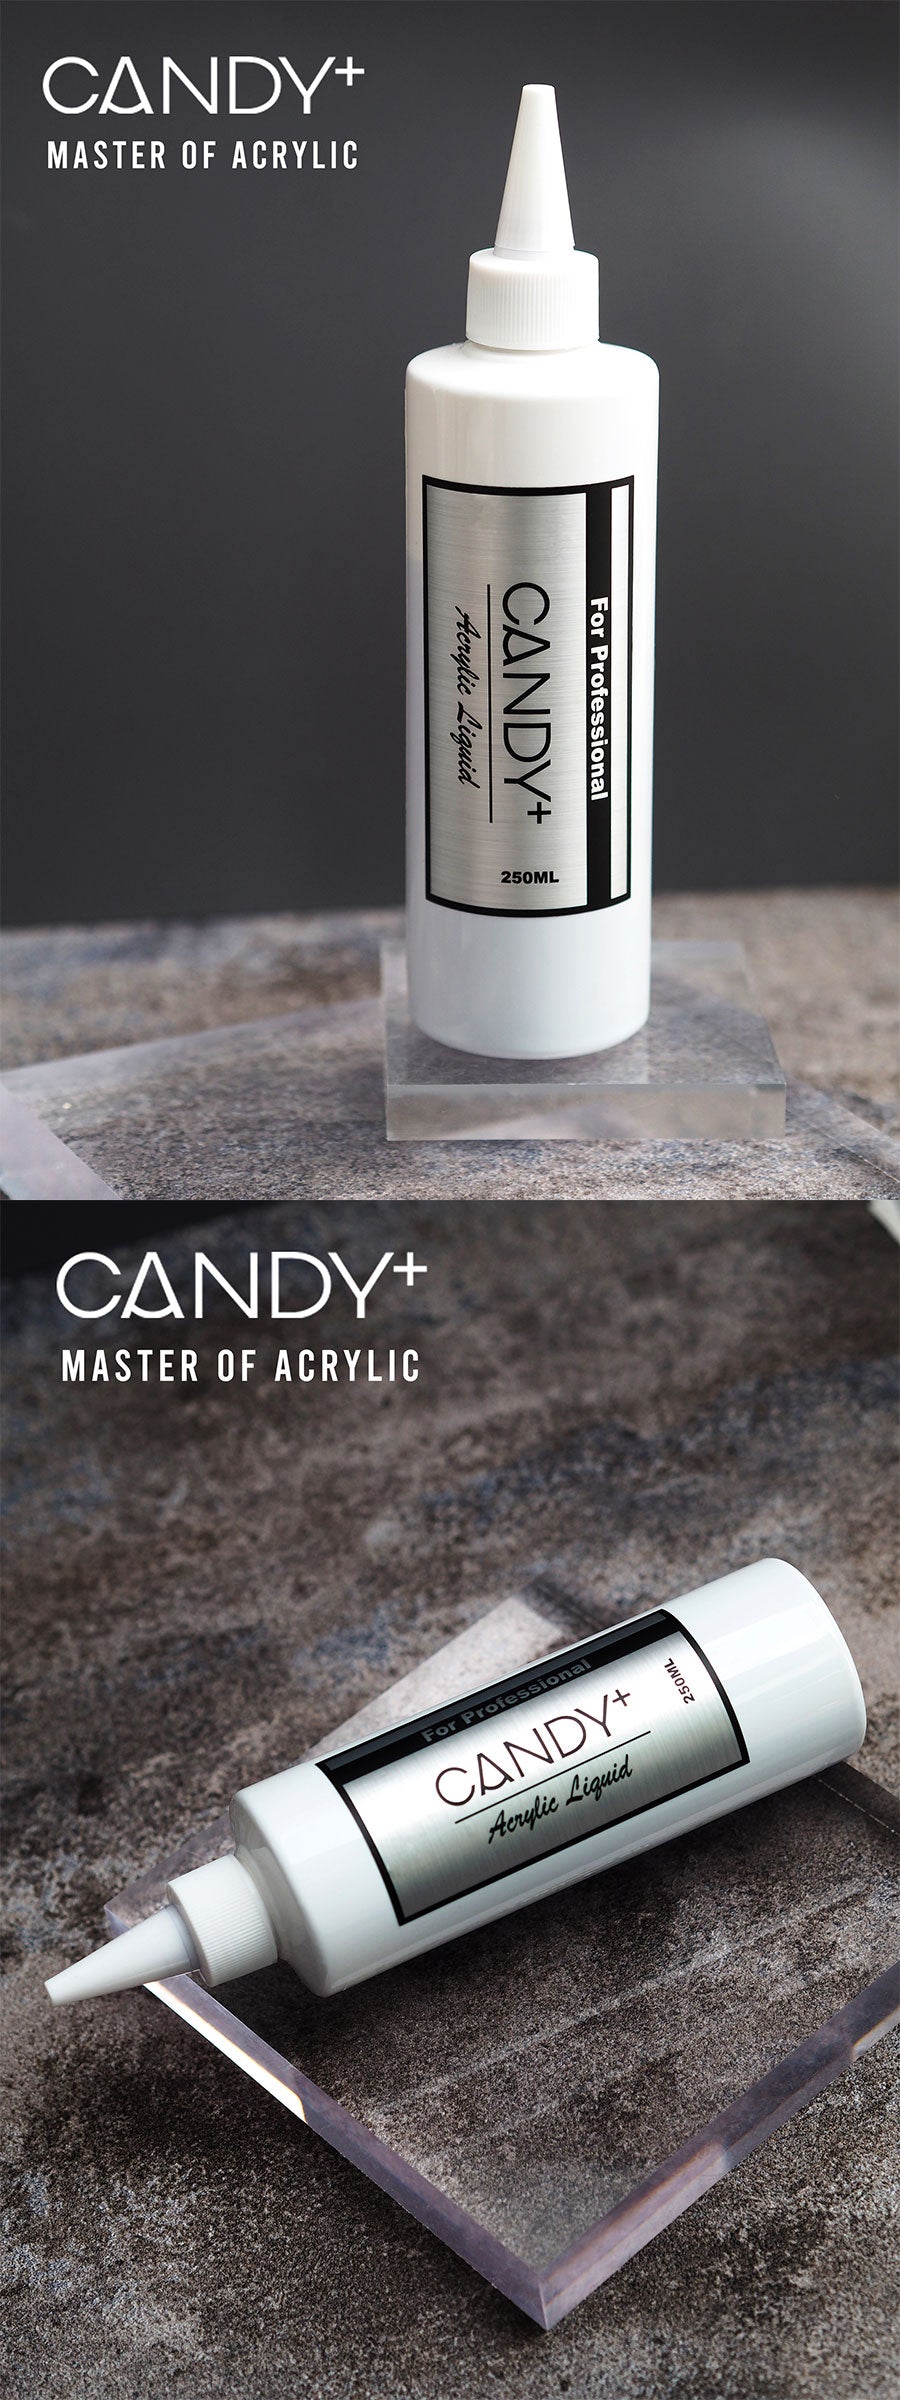 Candy+ Acrylic Liquid